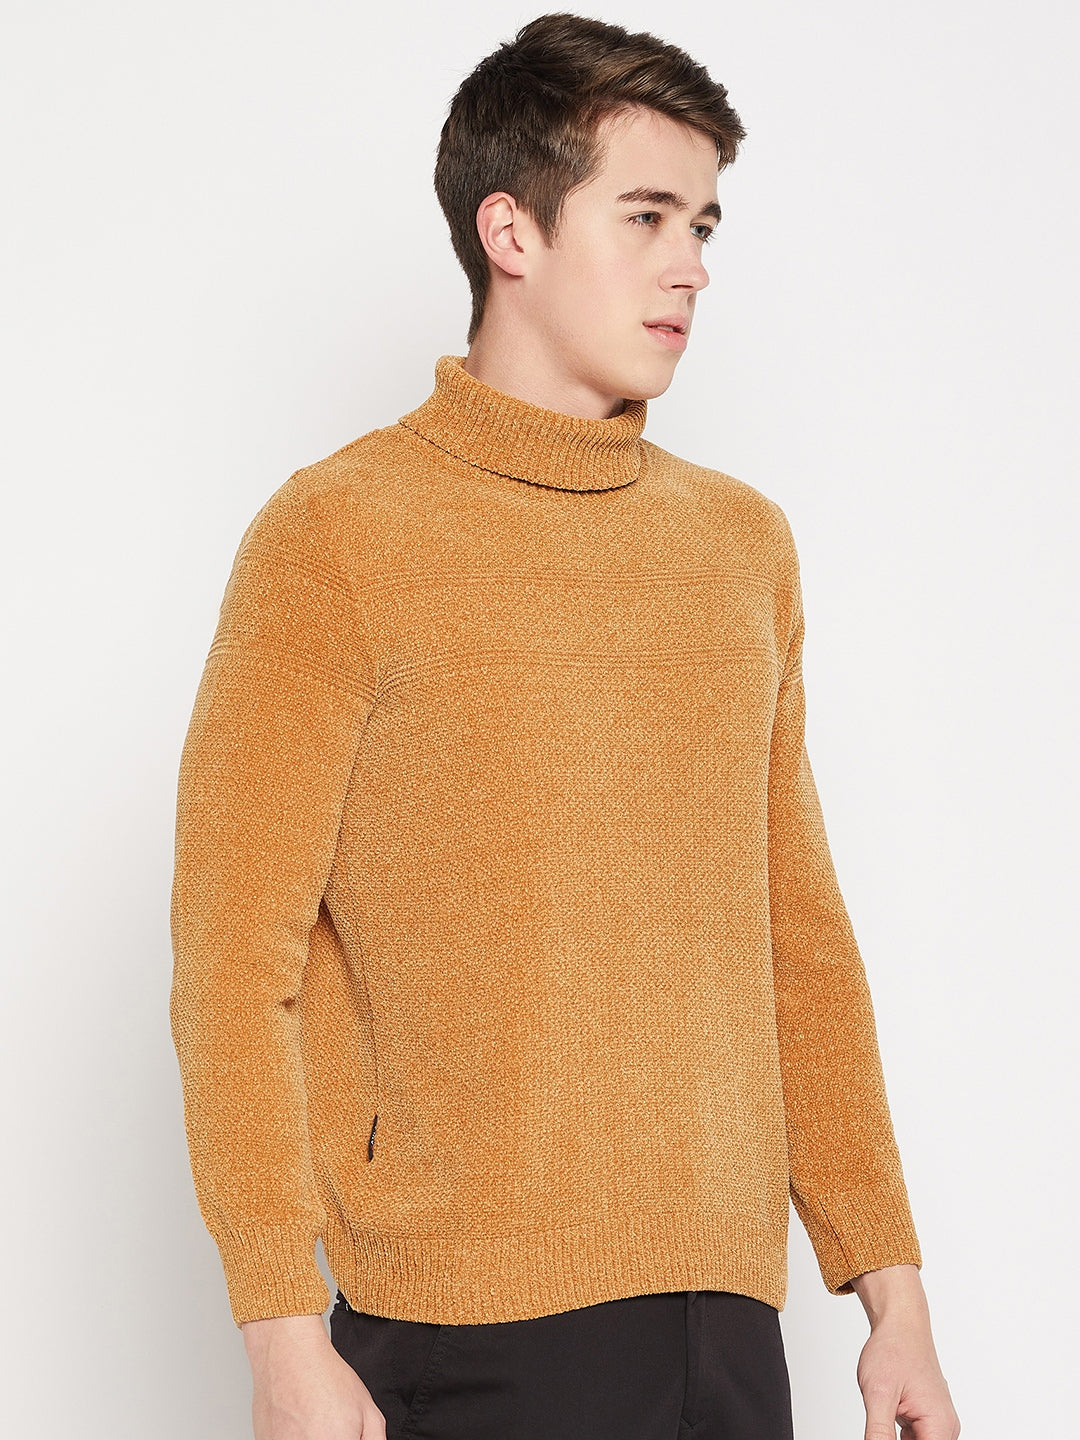 Camla Barcelona Mustard Sweater For Men